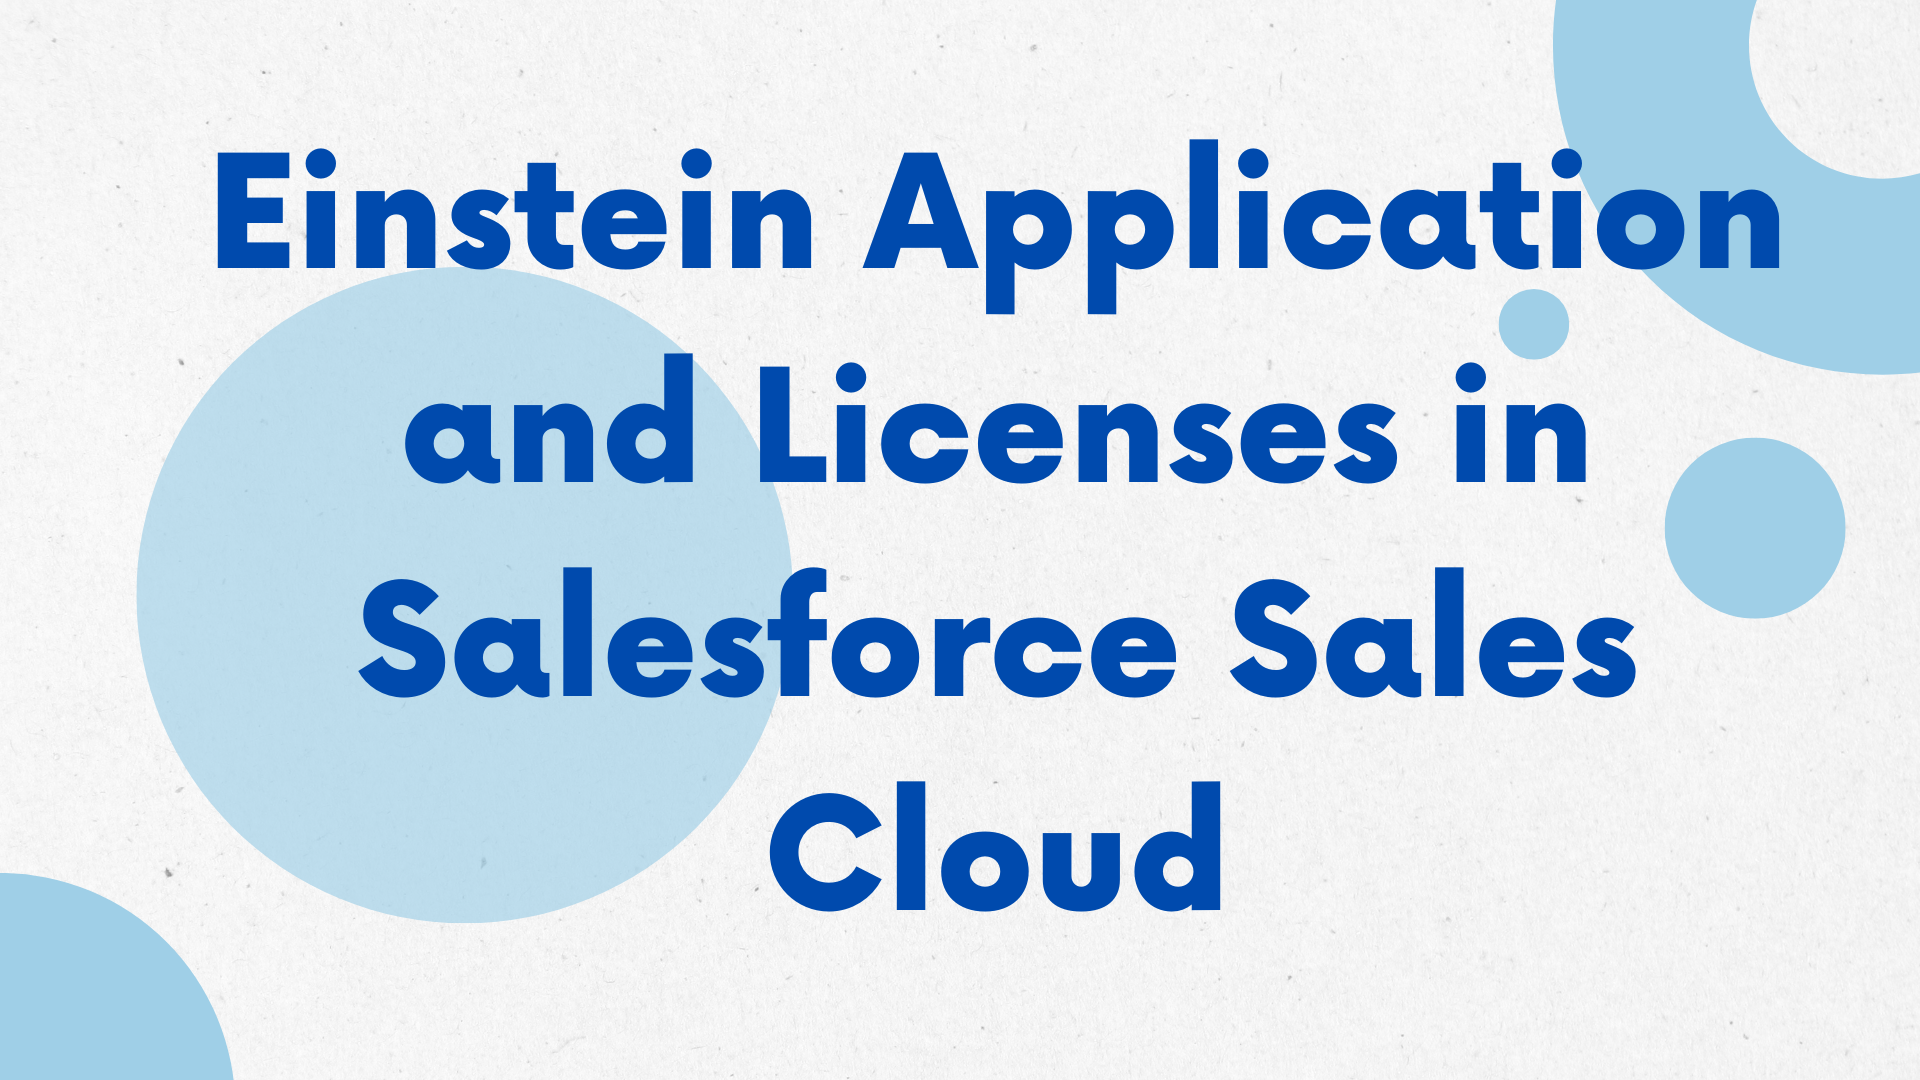 Einstein Application and Licenses in Salesforce Sales Cloud